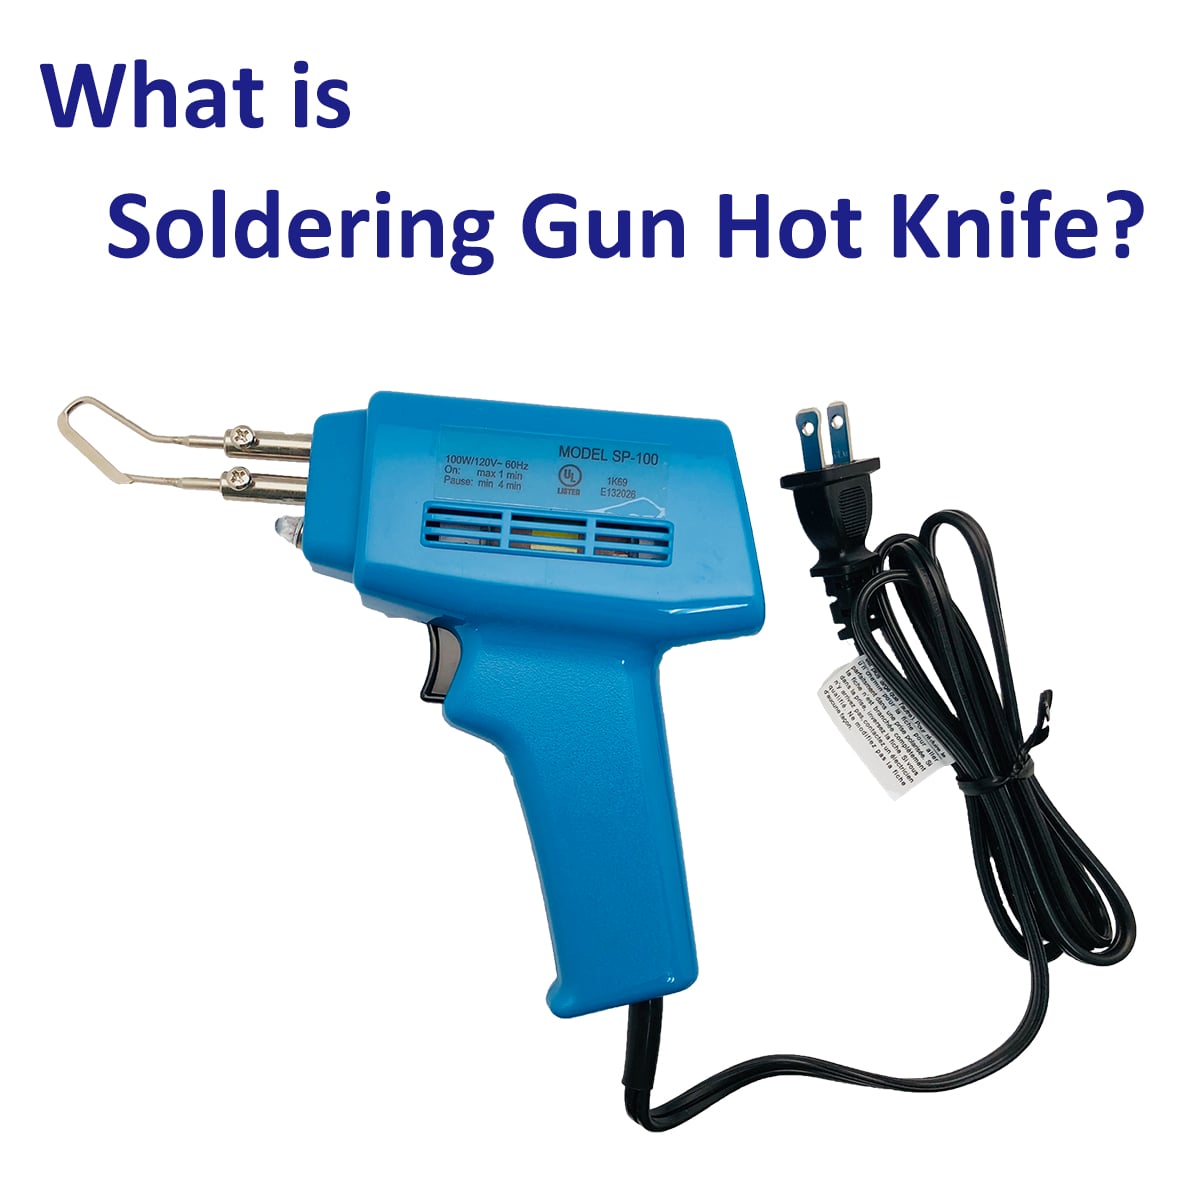 What is Soldering Gun Hot Knife